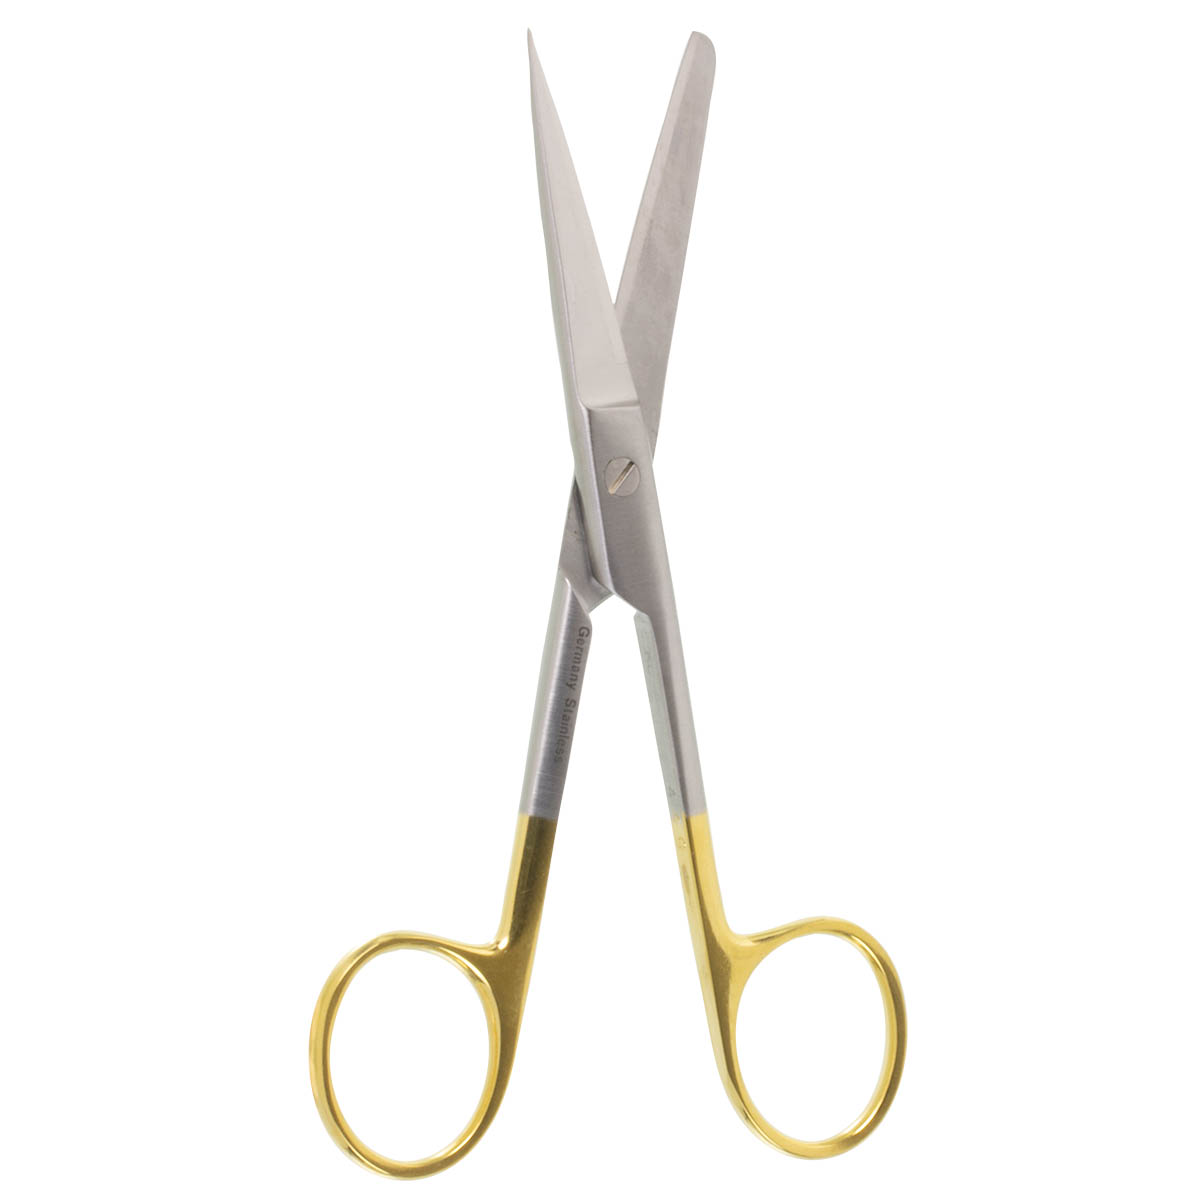 3 1/2 Standard Scissors - Straight _D_